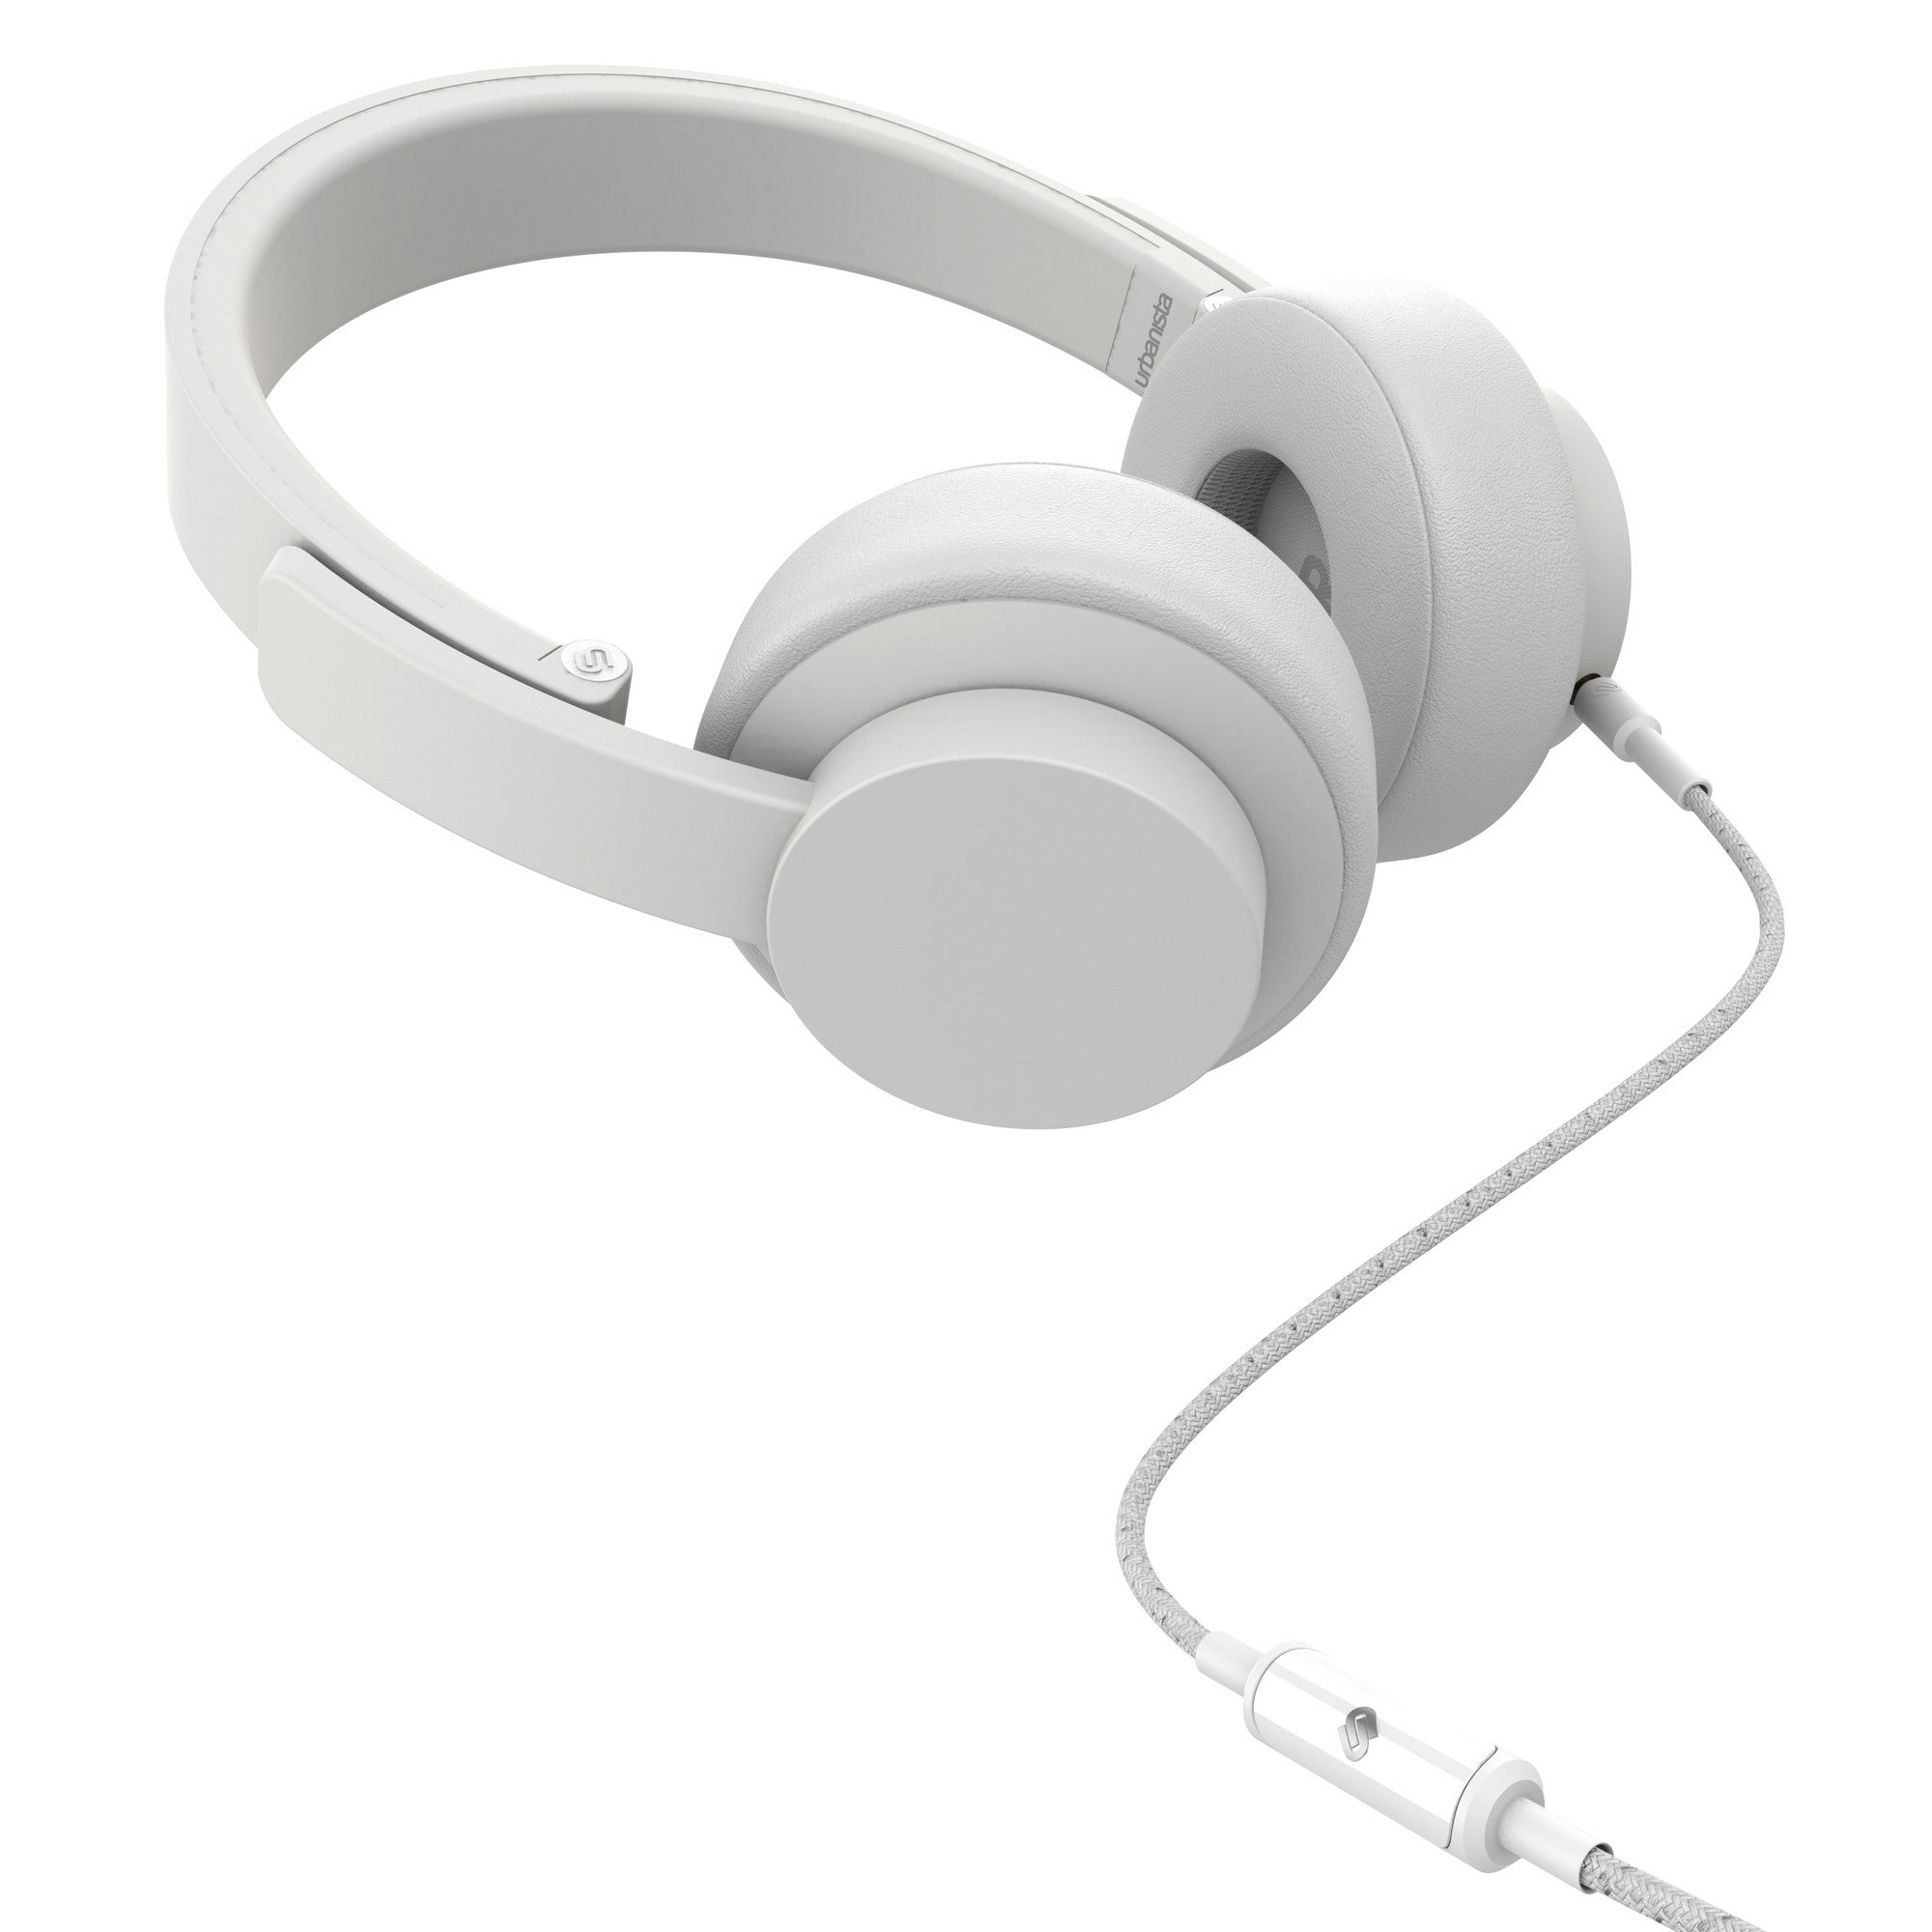 Urbanista White (Fluffy Cloud) Seattle Corded Headphones - 15-01270